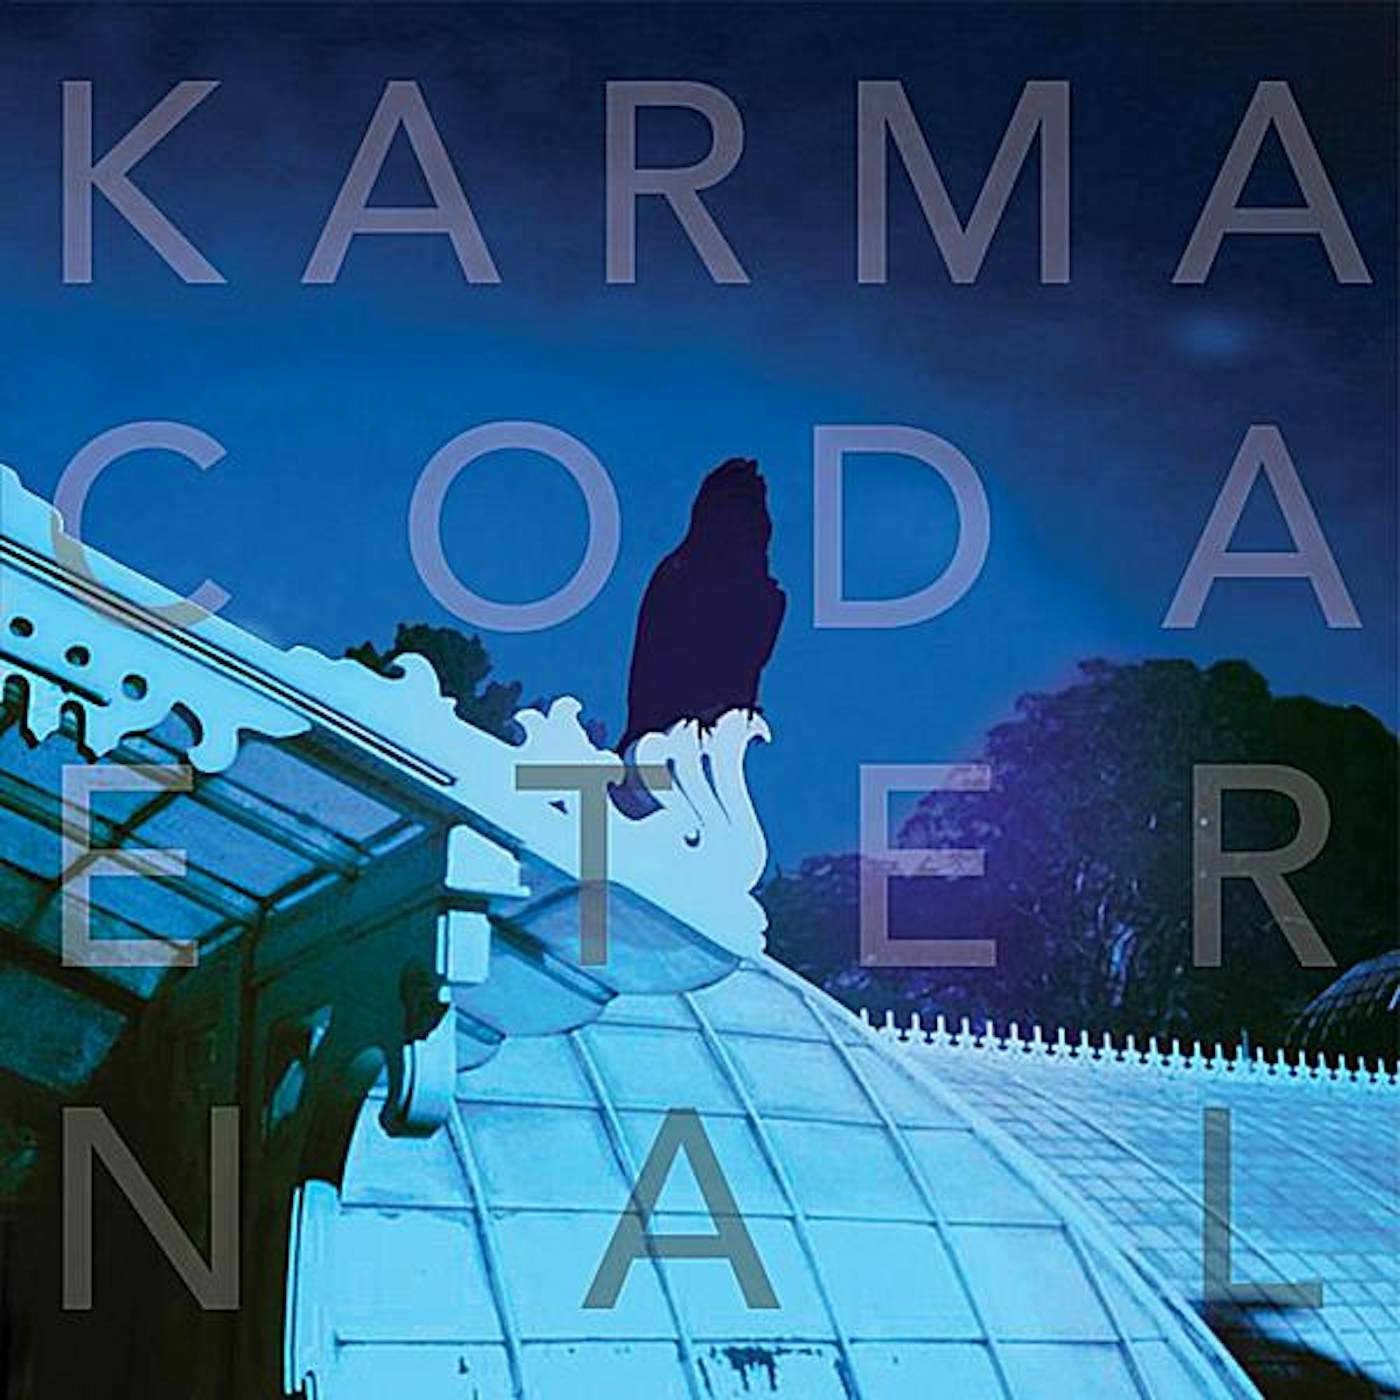 Karmacoda ETERNAL CD